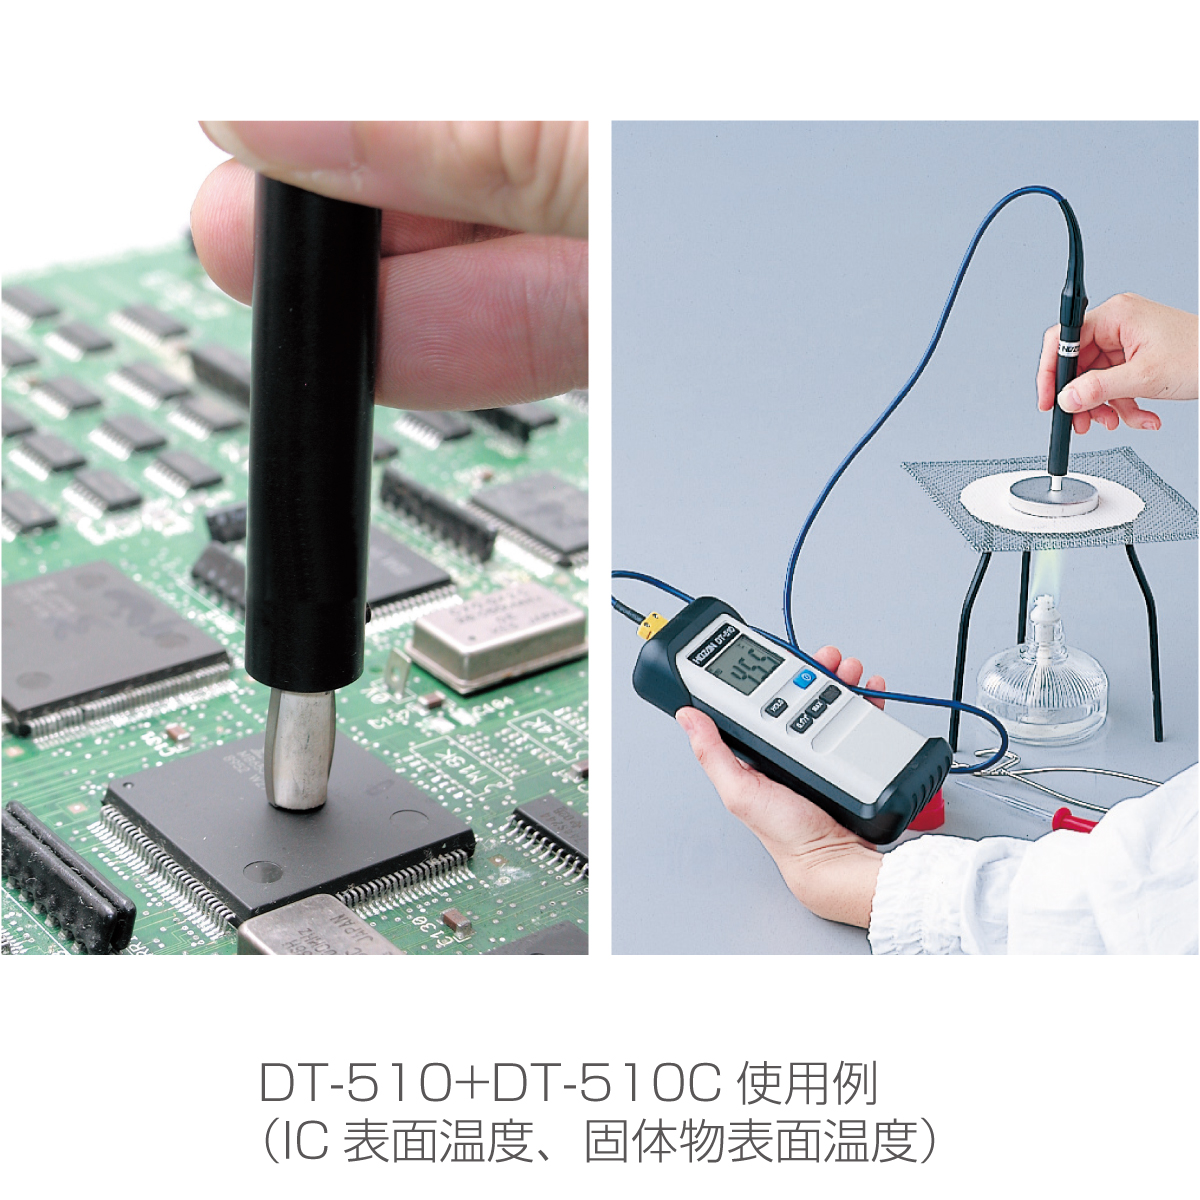 FAQ詳細 -DT-510 デジタル温度計 で使用できるセンサプローブ・サーモ